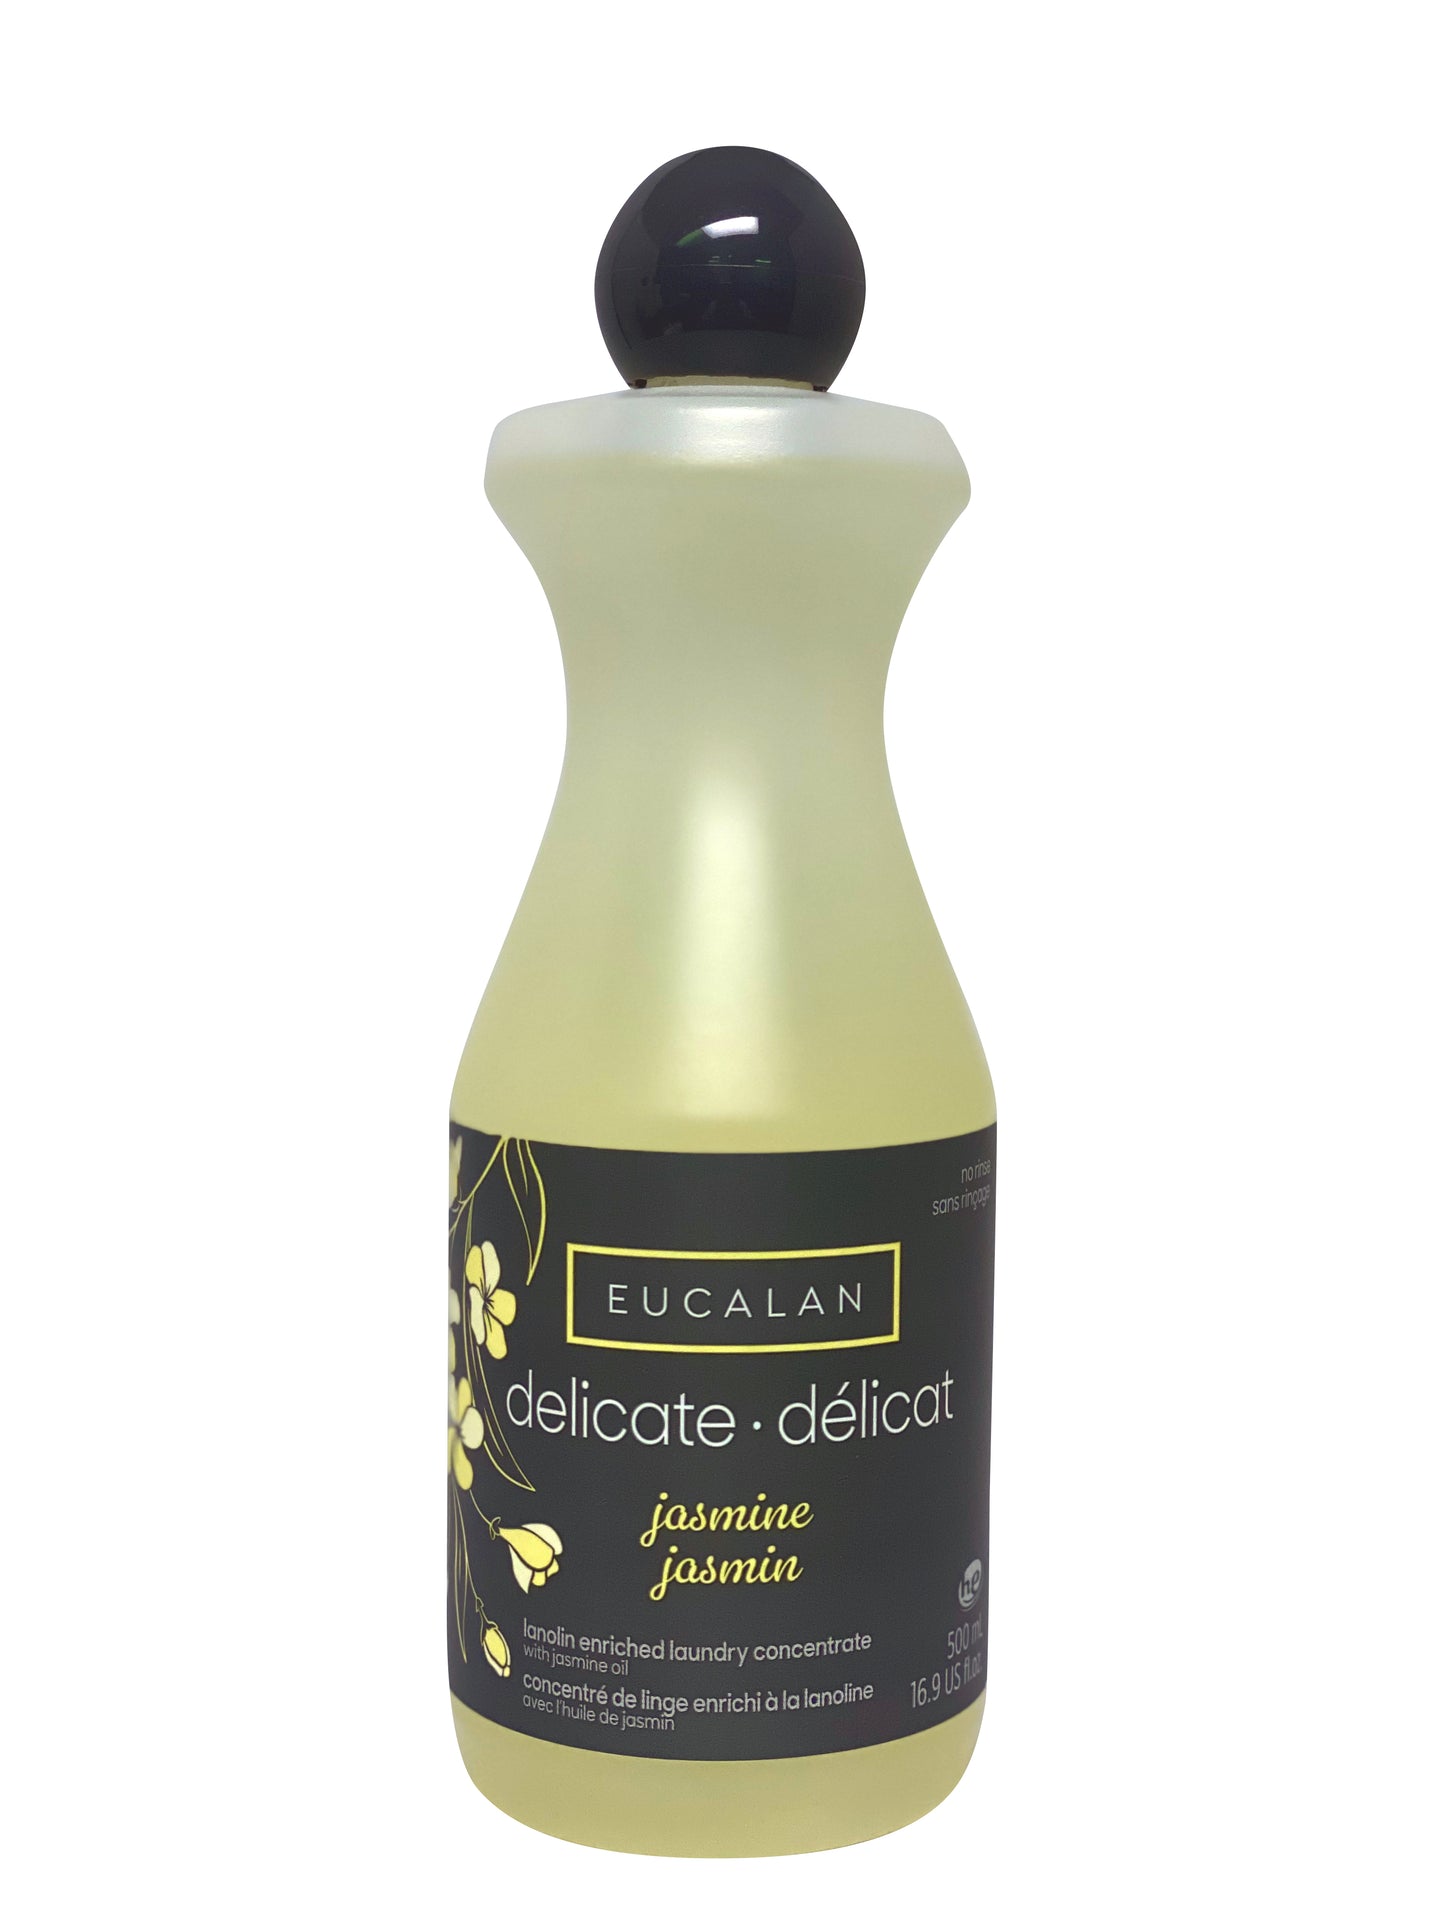 16.9 ounce bottle of Eucalan Jasmine for 95 washes